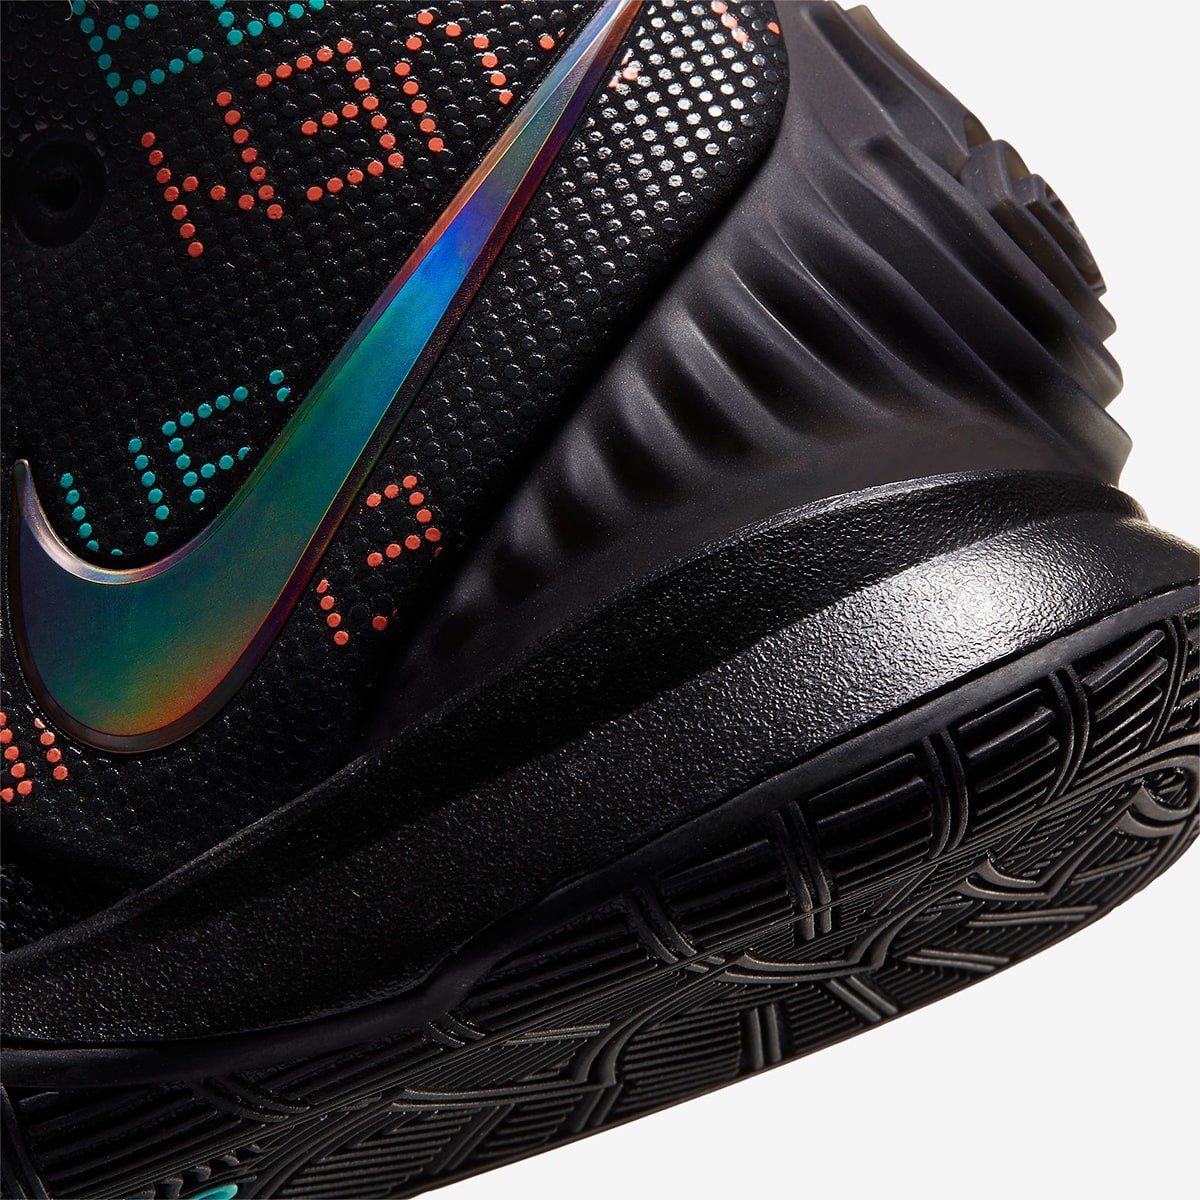 The Nike Kyrie 6 Zoom Freak 1 Receive 'Oreo' Revamps